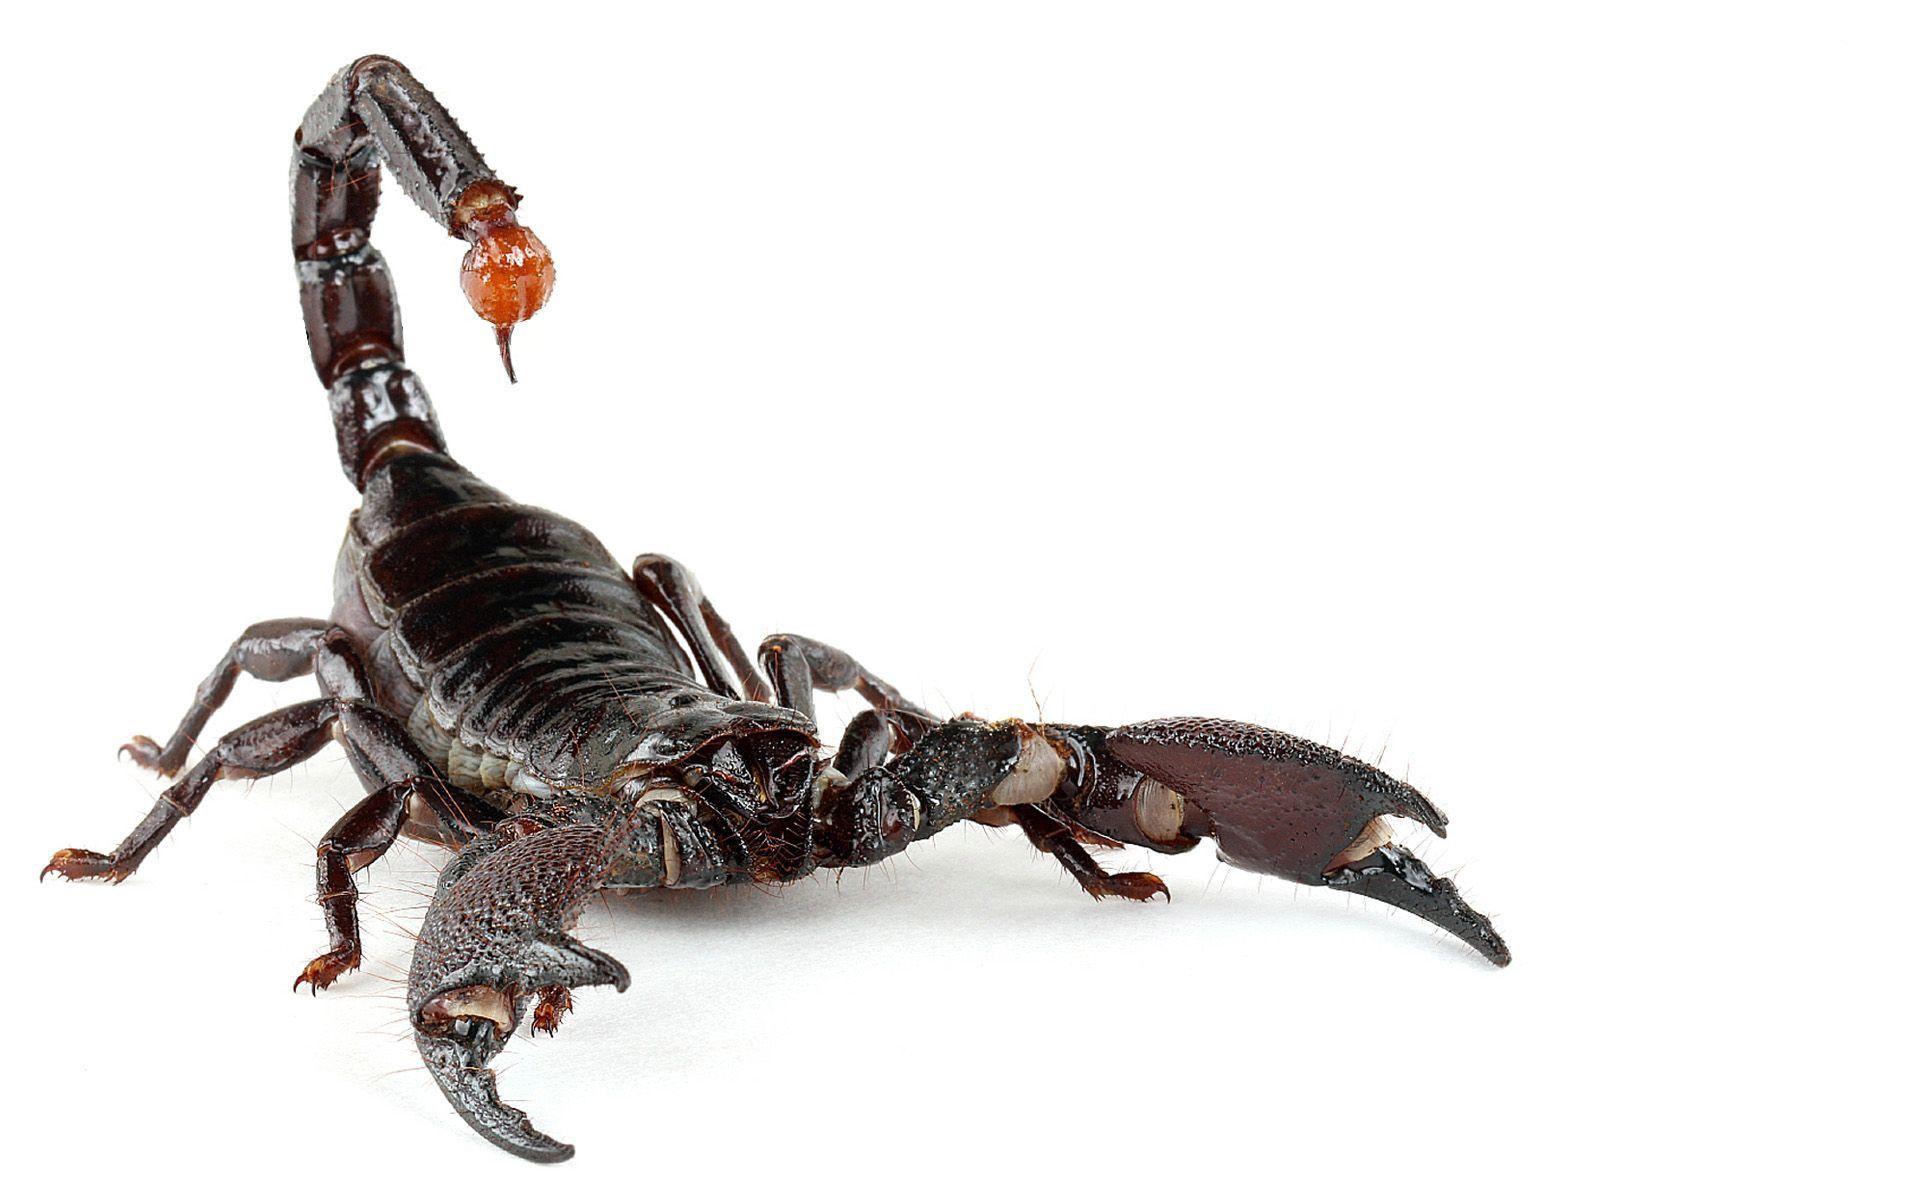 Scorpion HD Image